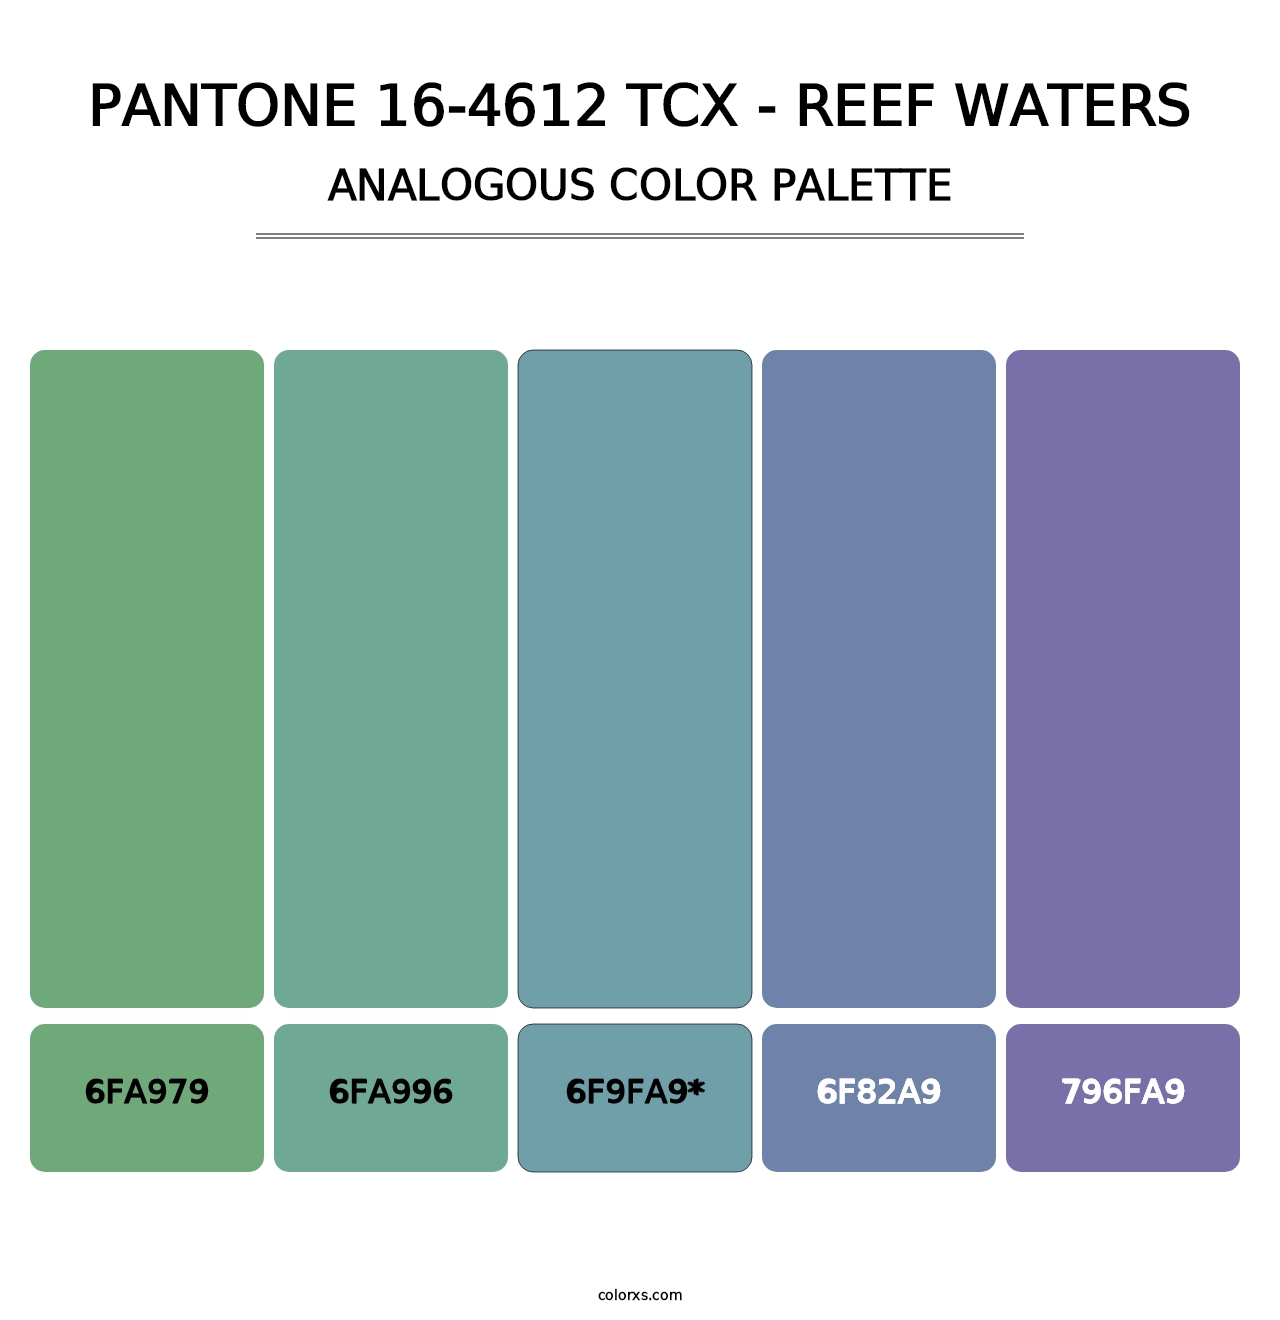 PANTONE 16-4612 TCX - Reef Waters - Analogous Color Palette